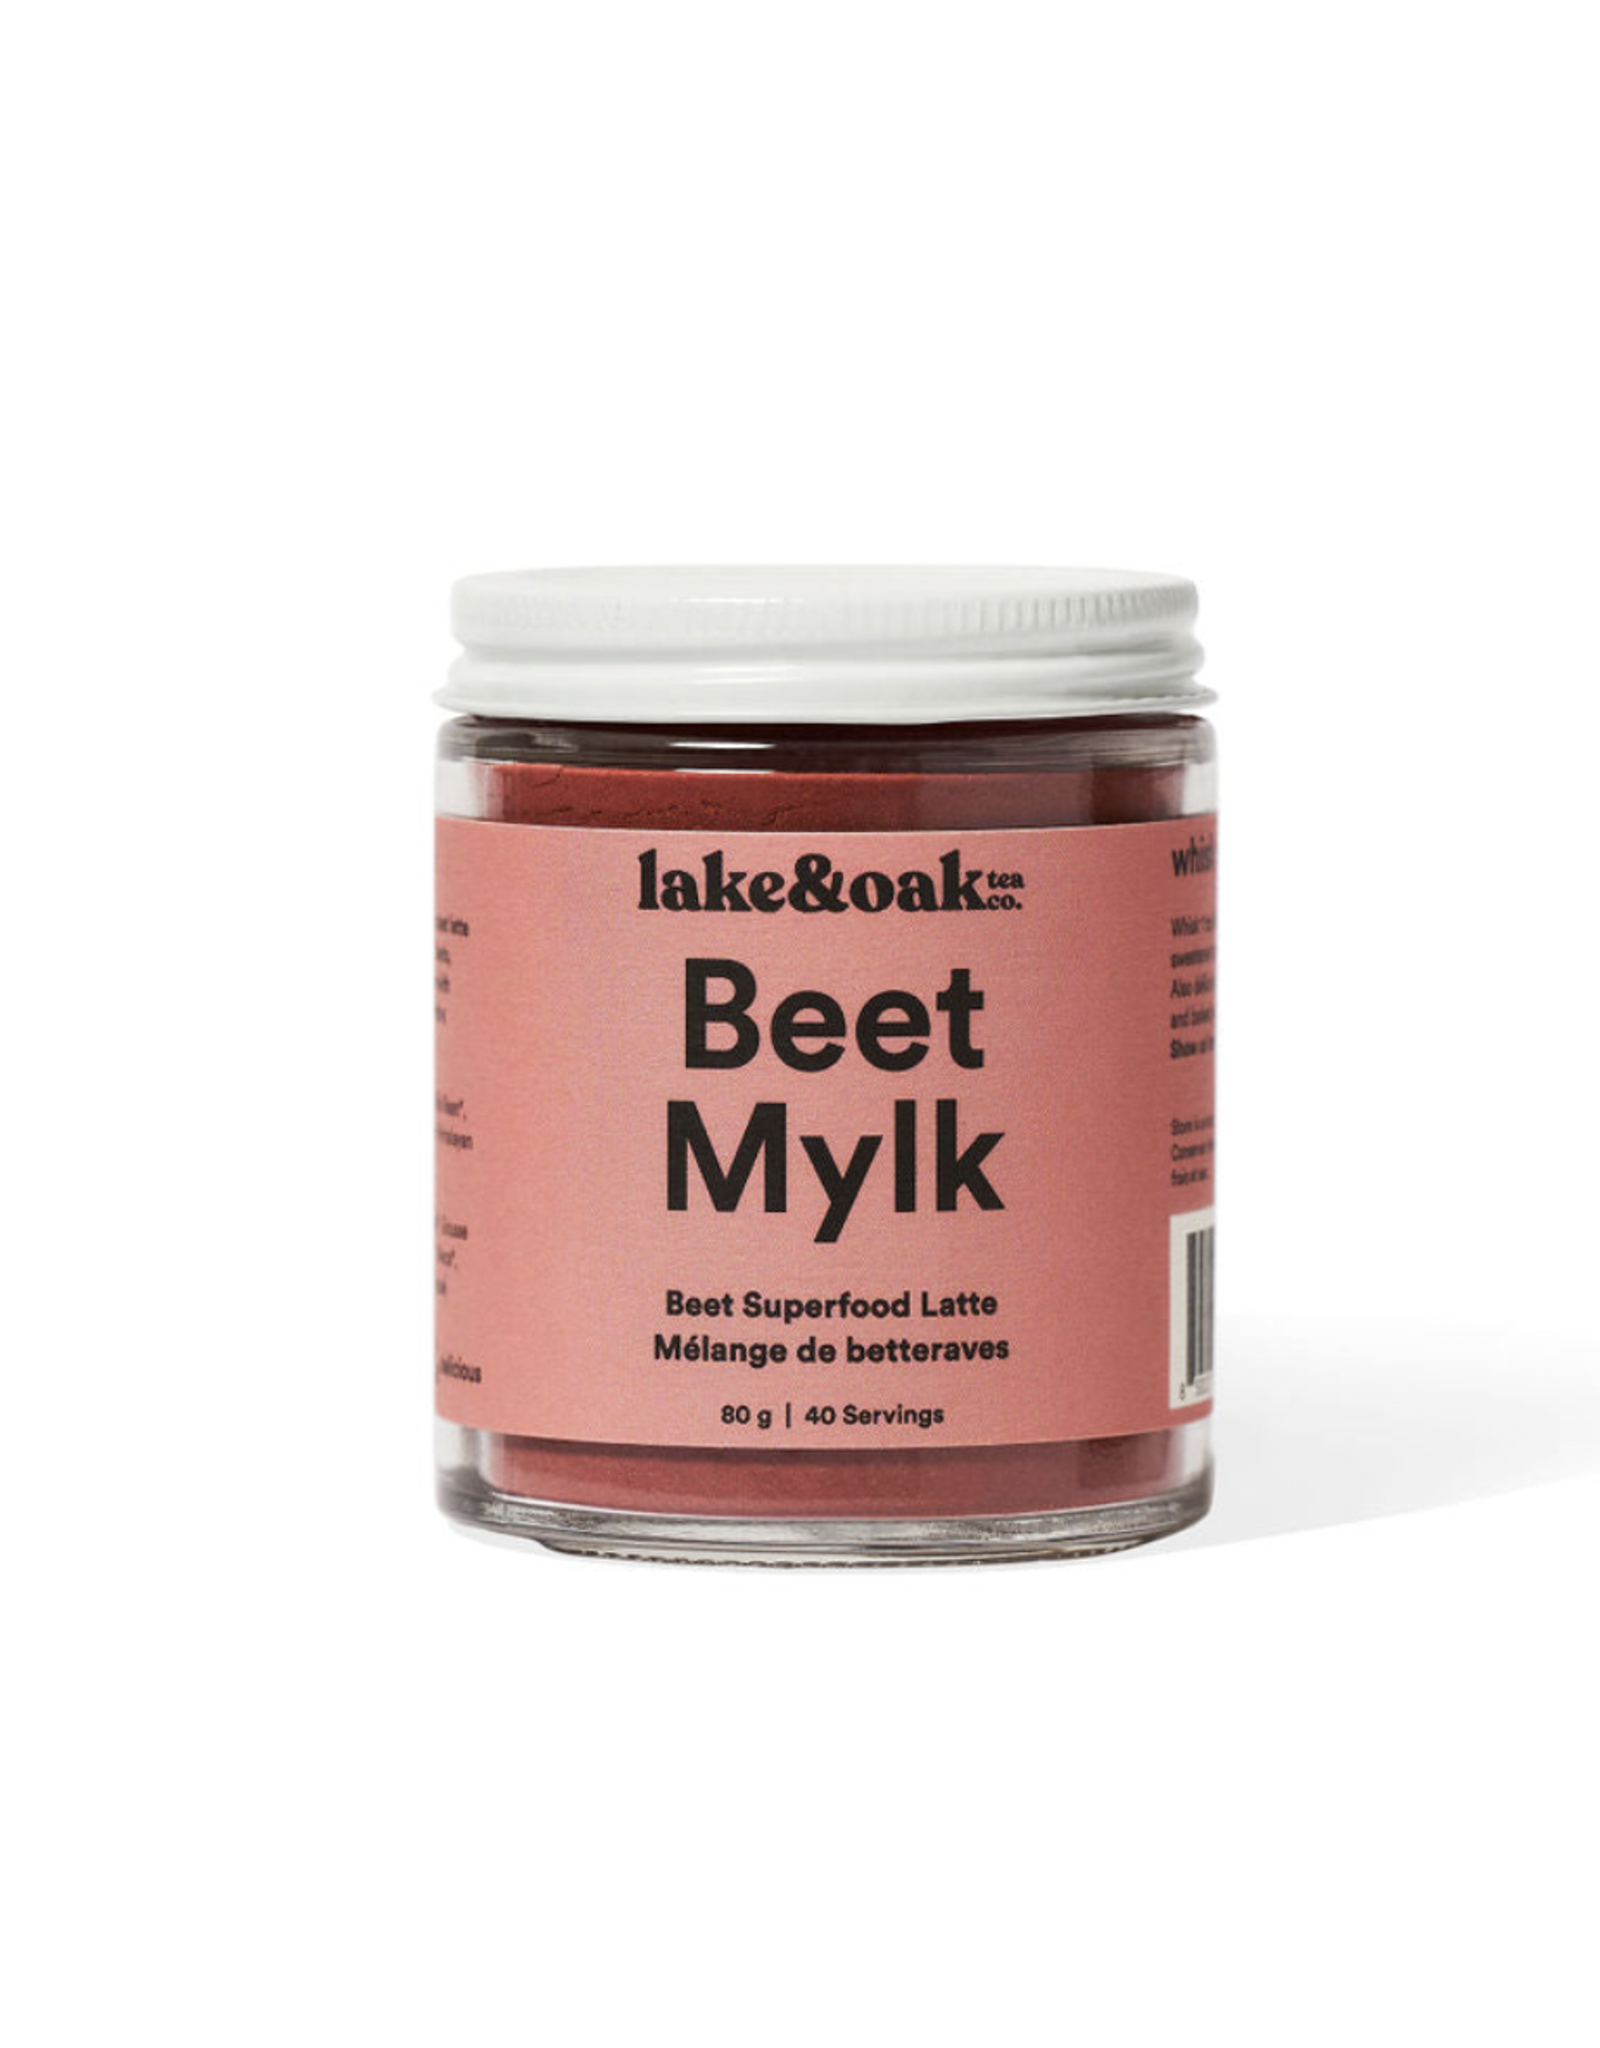 Lake & Oak Tea Co. Beet Mylk - Superfood Latte Blend